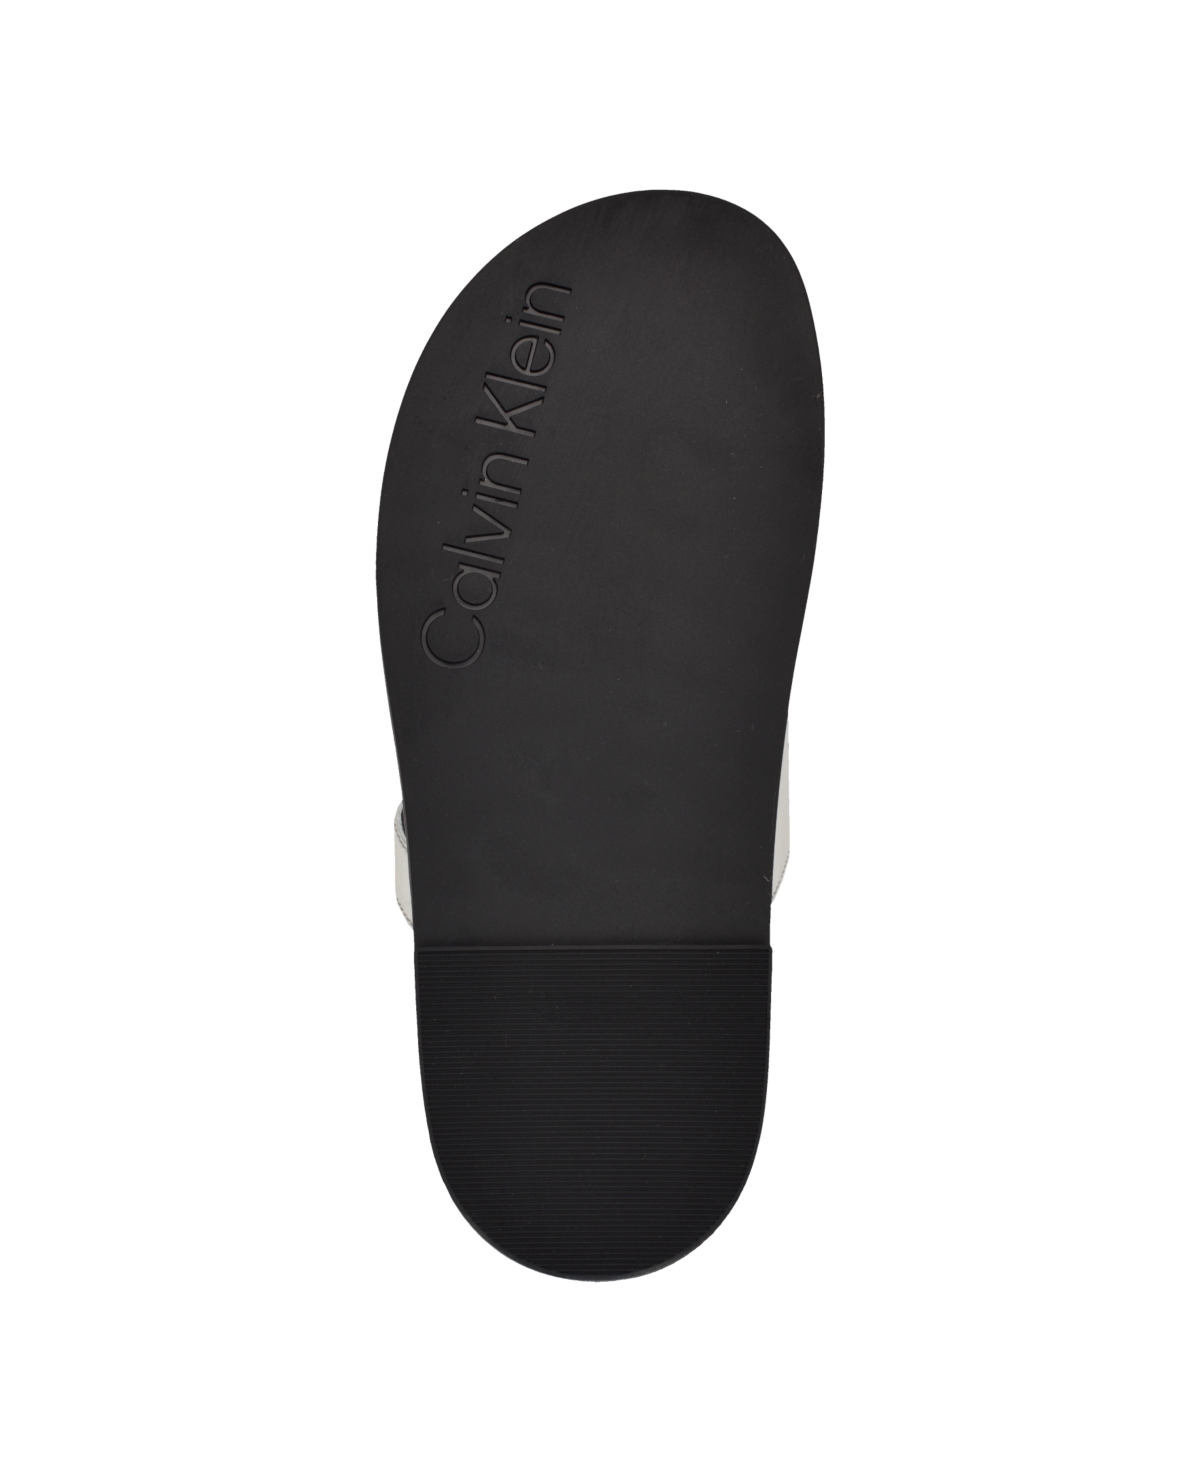 Shop Calvin Klein Women's Explore Slip-on Strappy Causal Sandals In Silver